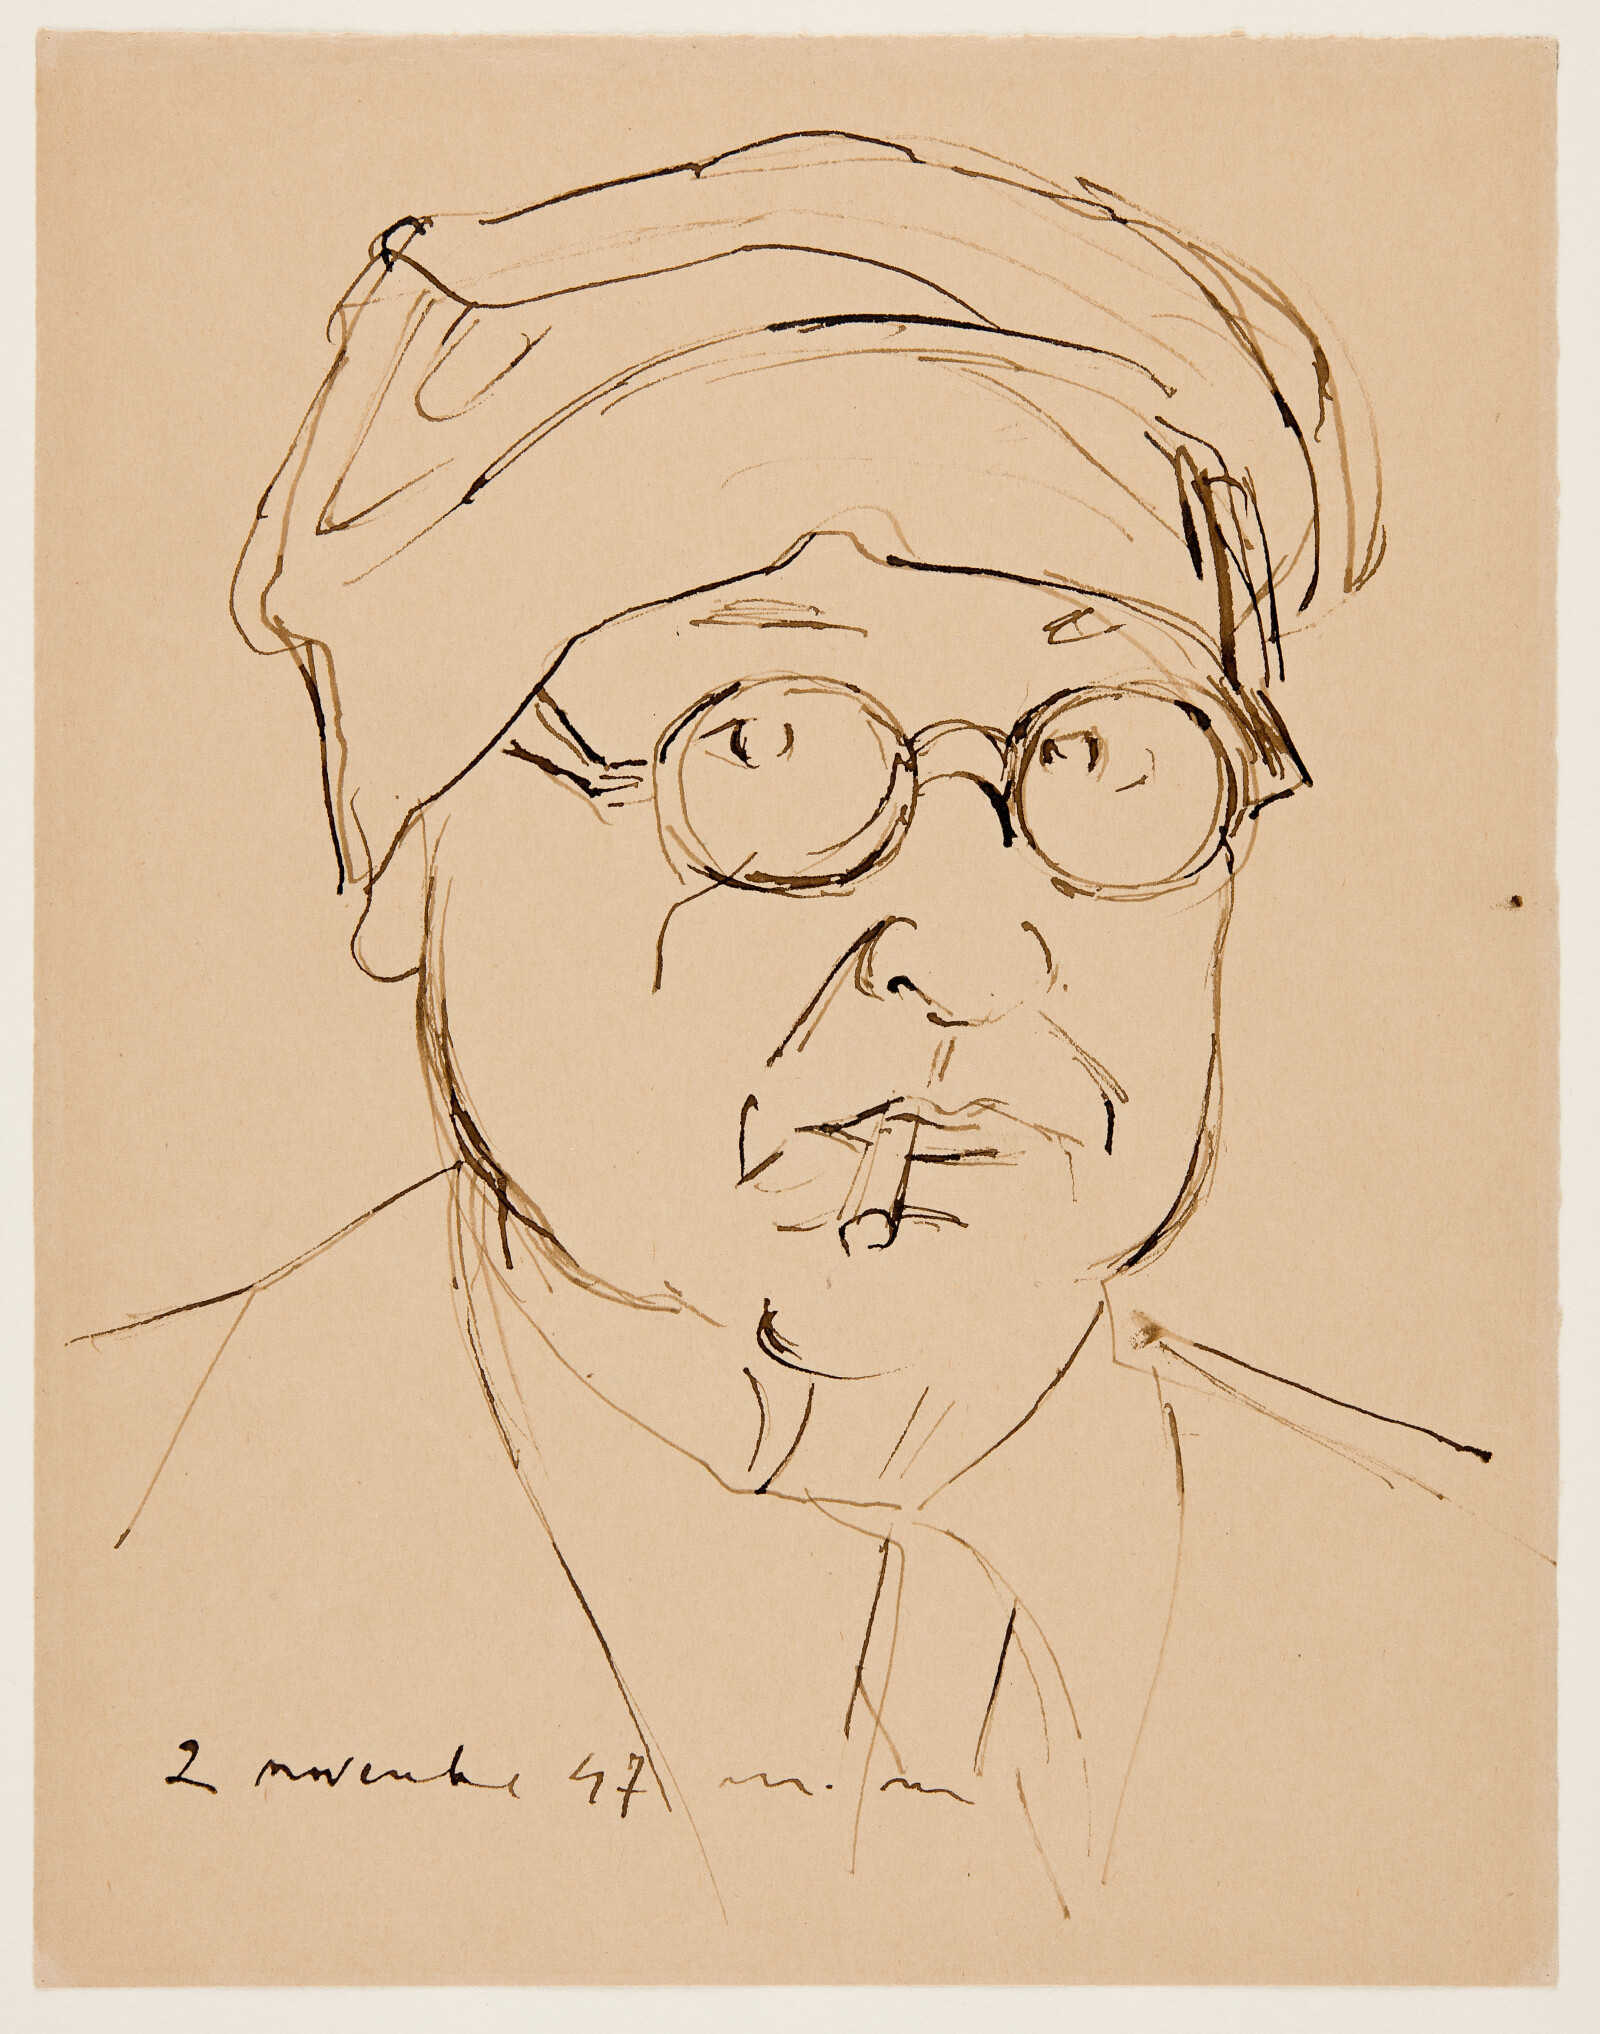 Self portrait, 1947, pen and ink on paper. (DA008196)